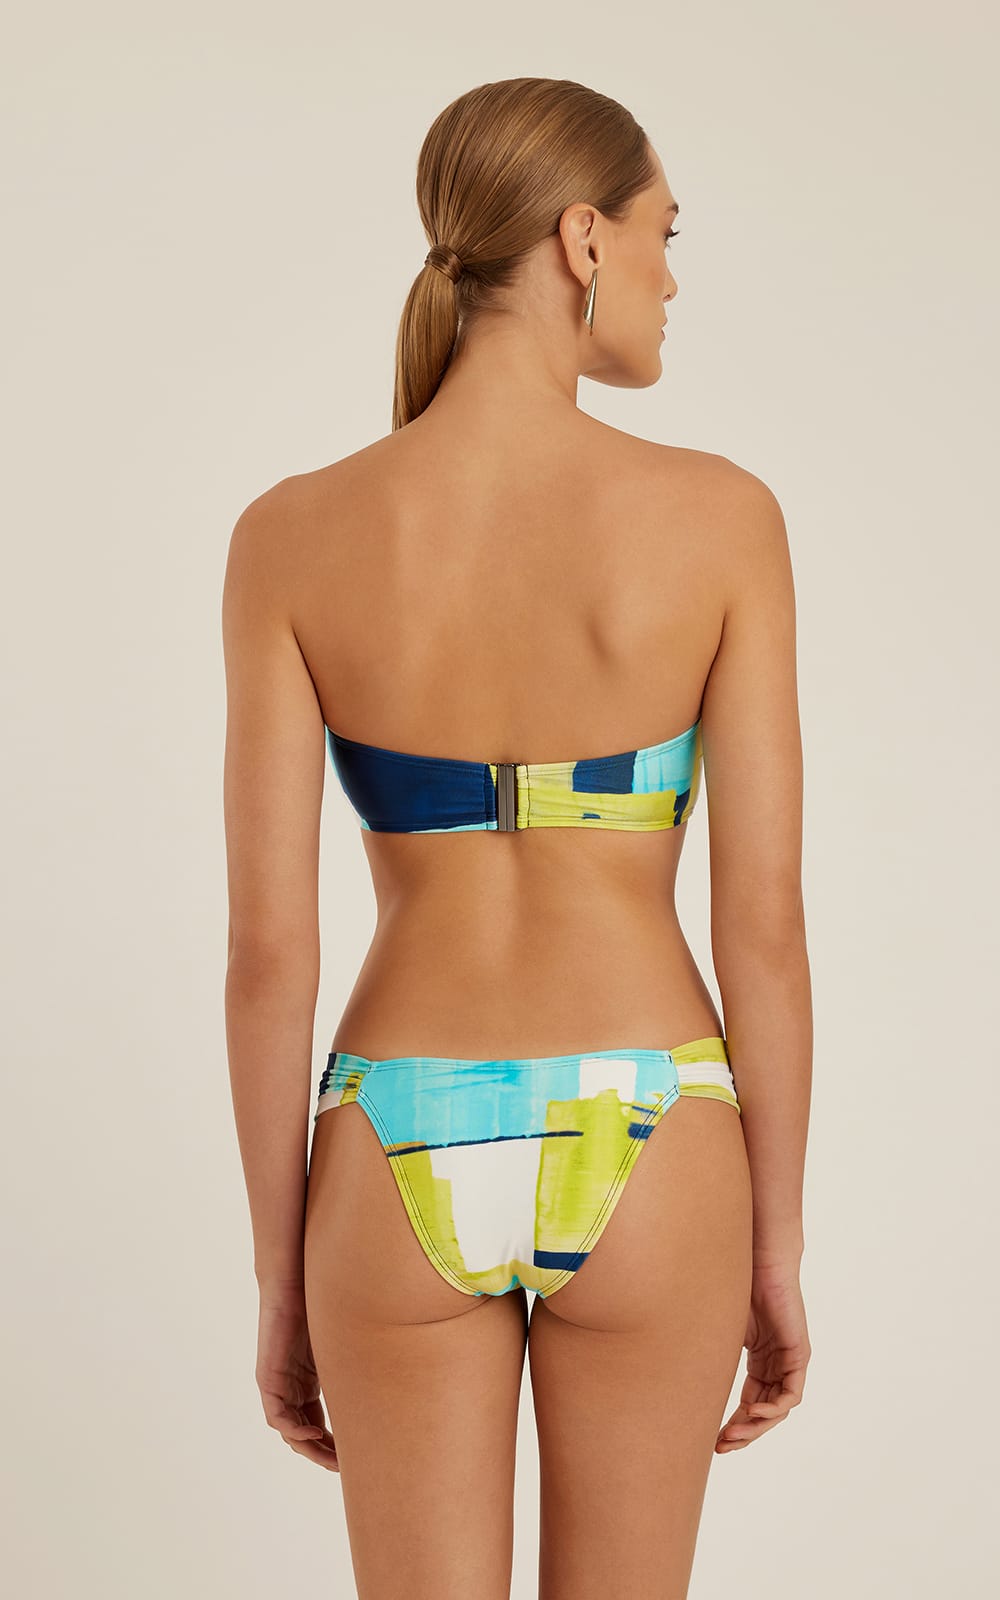 Lenny Drop Bandeau Geo - Premium Bikini Top from Marina St Barth - Just $175! Shop now at Marina St Barth